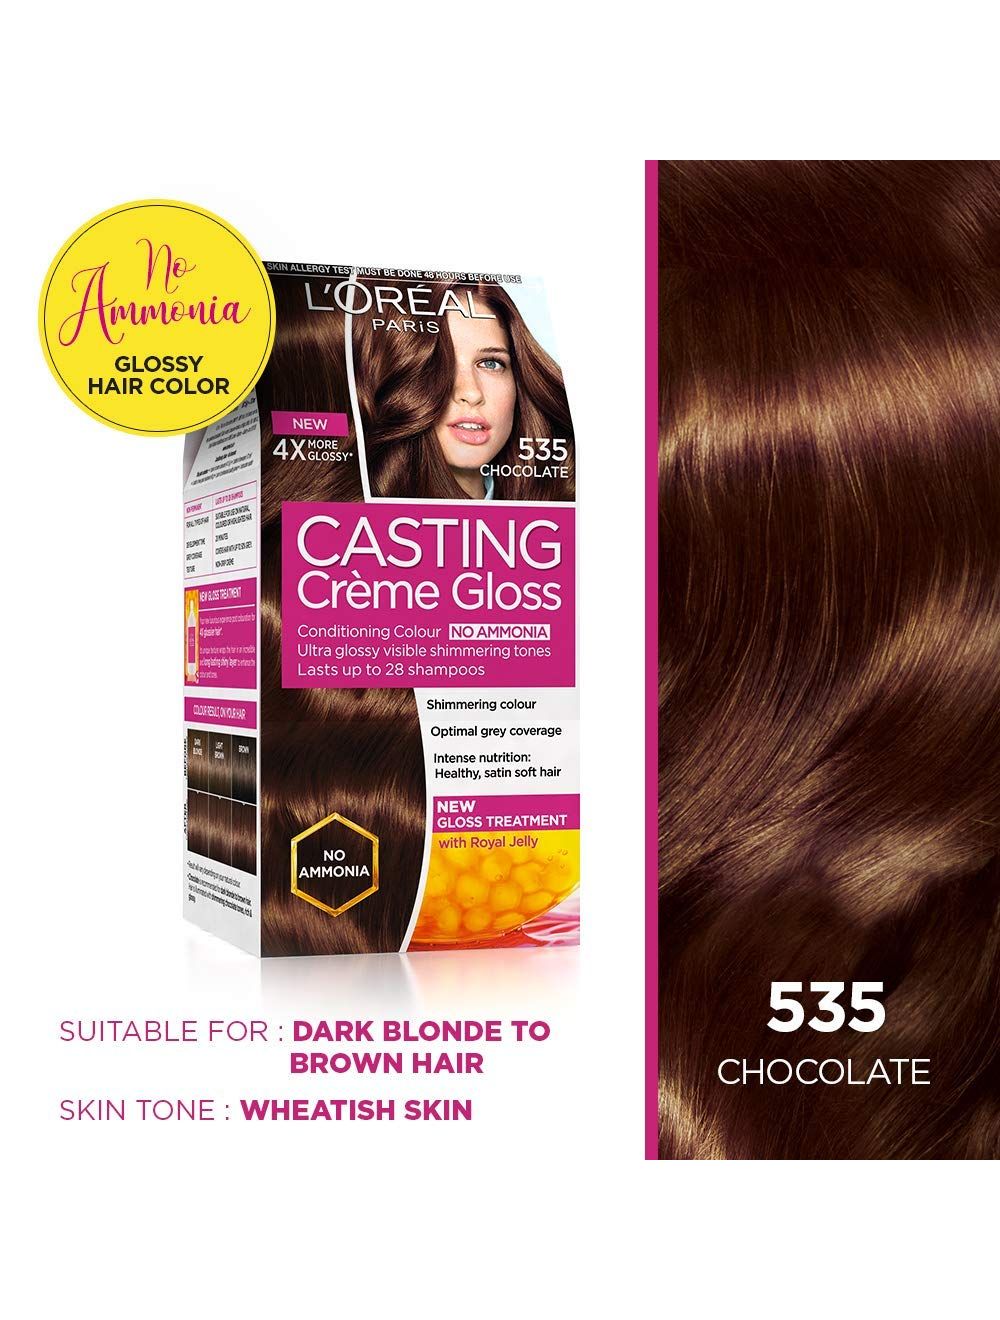 L'Oreal Paris Casting Creme Gloss Hair Color-535 Chocolate - Niram